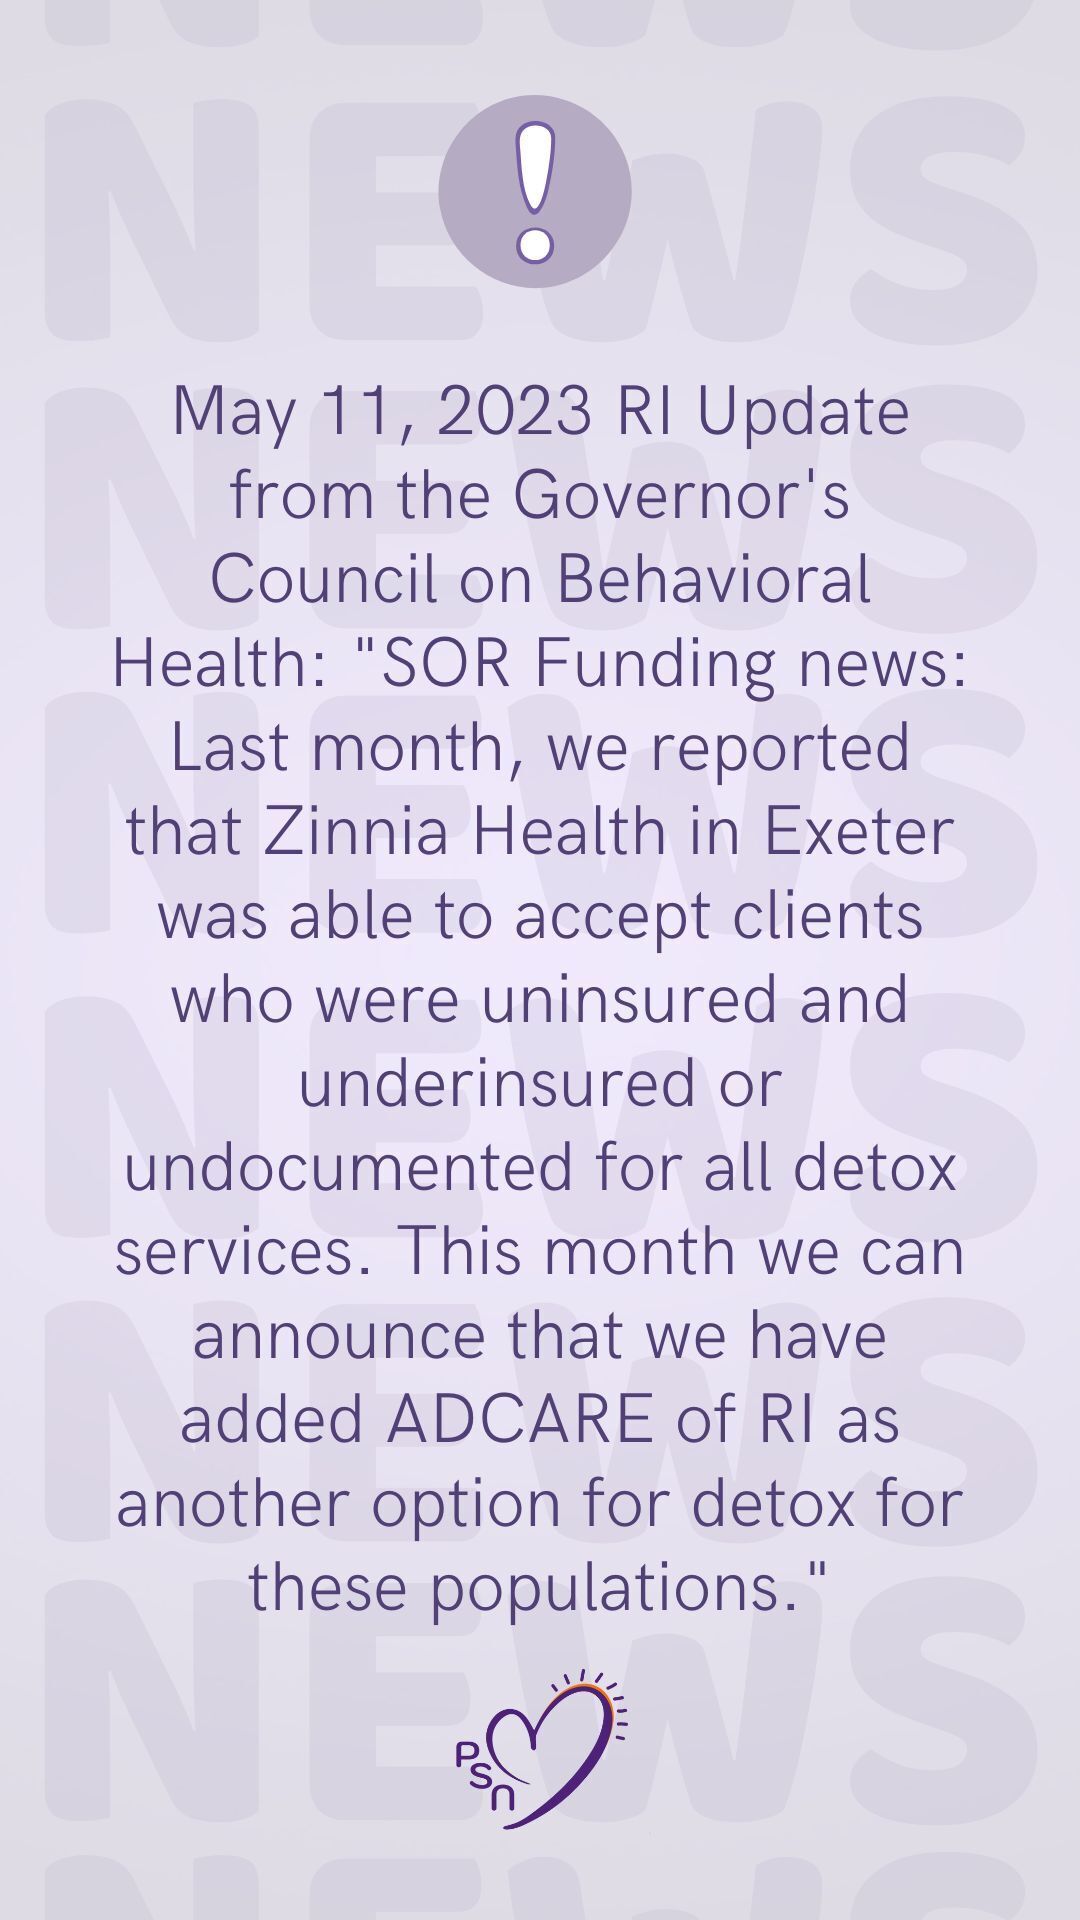 RI Detox Services Update for Underinsured/Uninsured/Undocumented